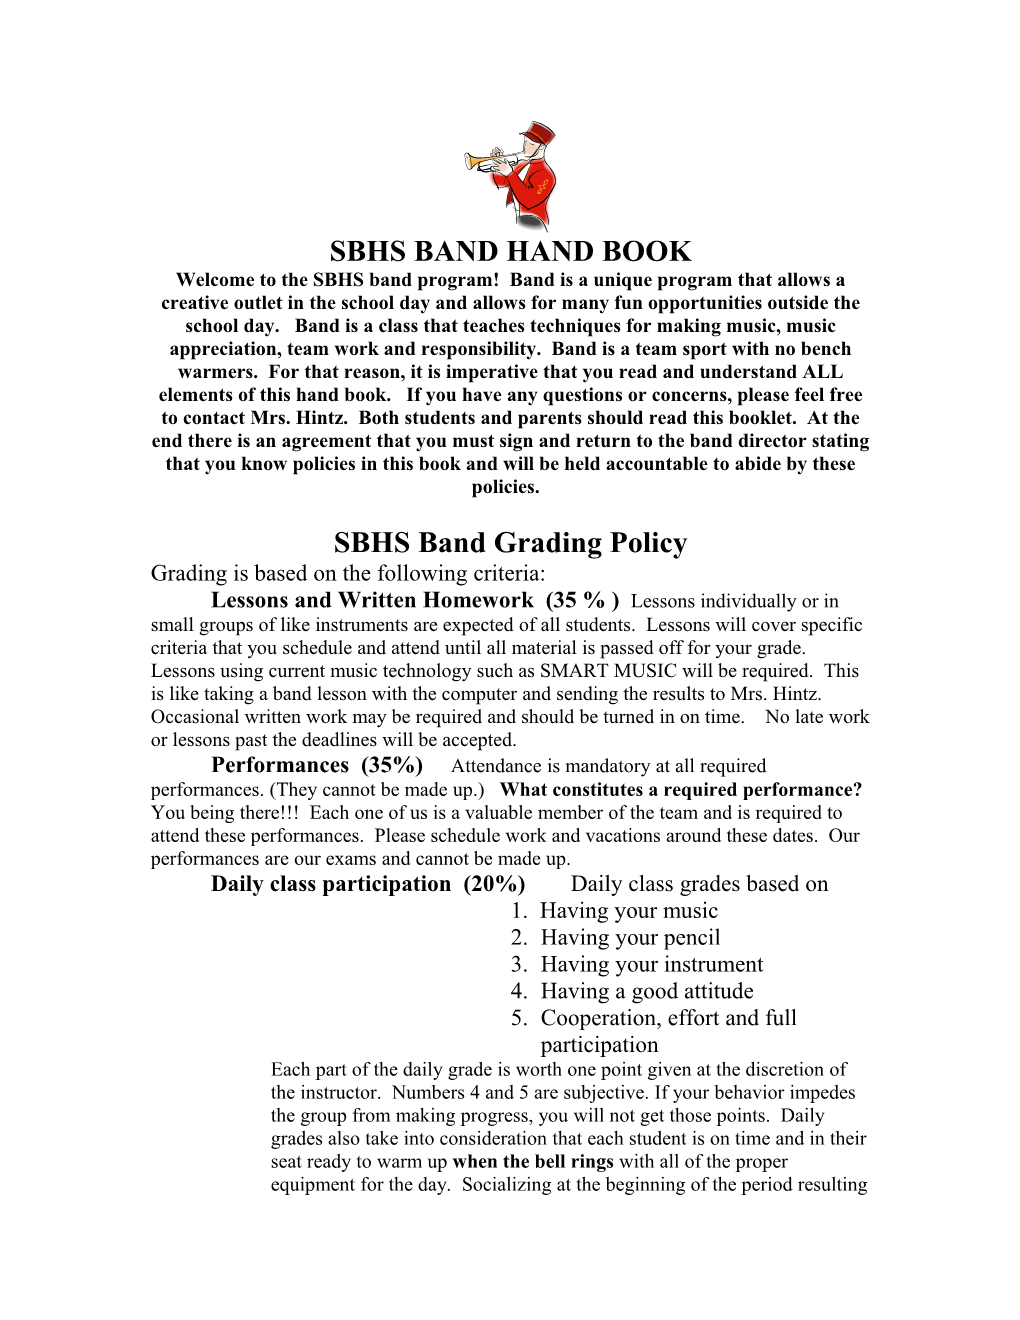 SBHS Band Handbook